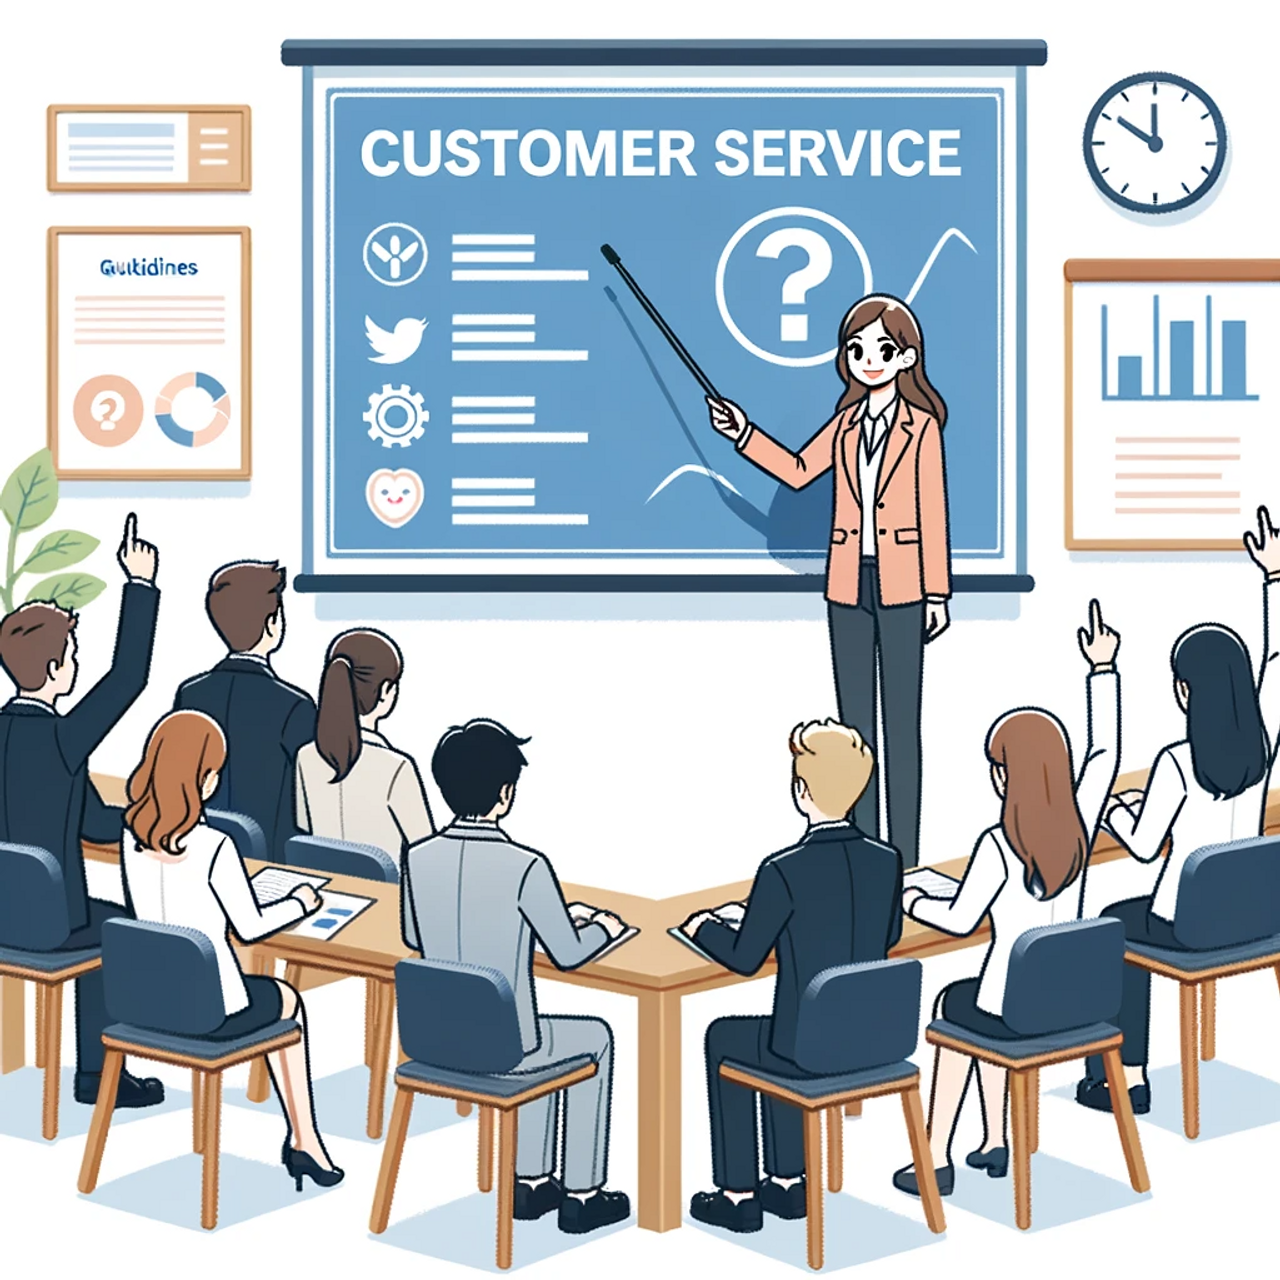 Customer service skills training